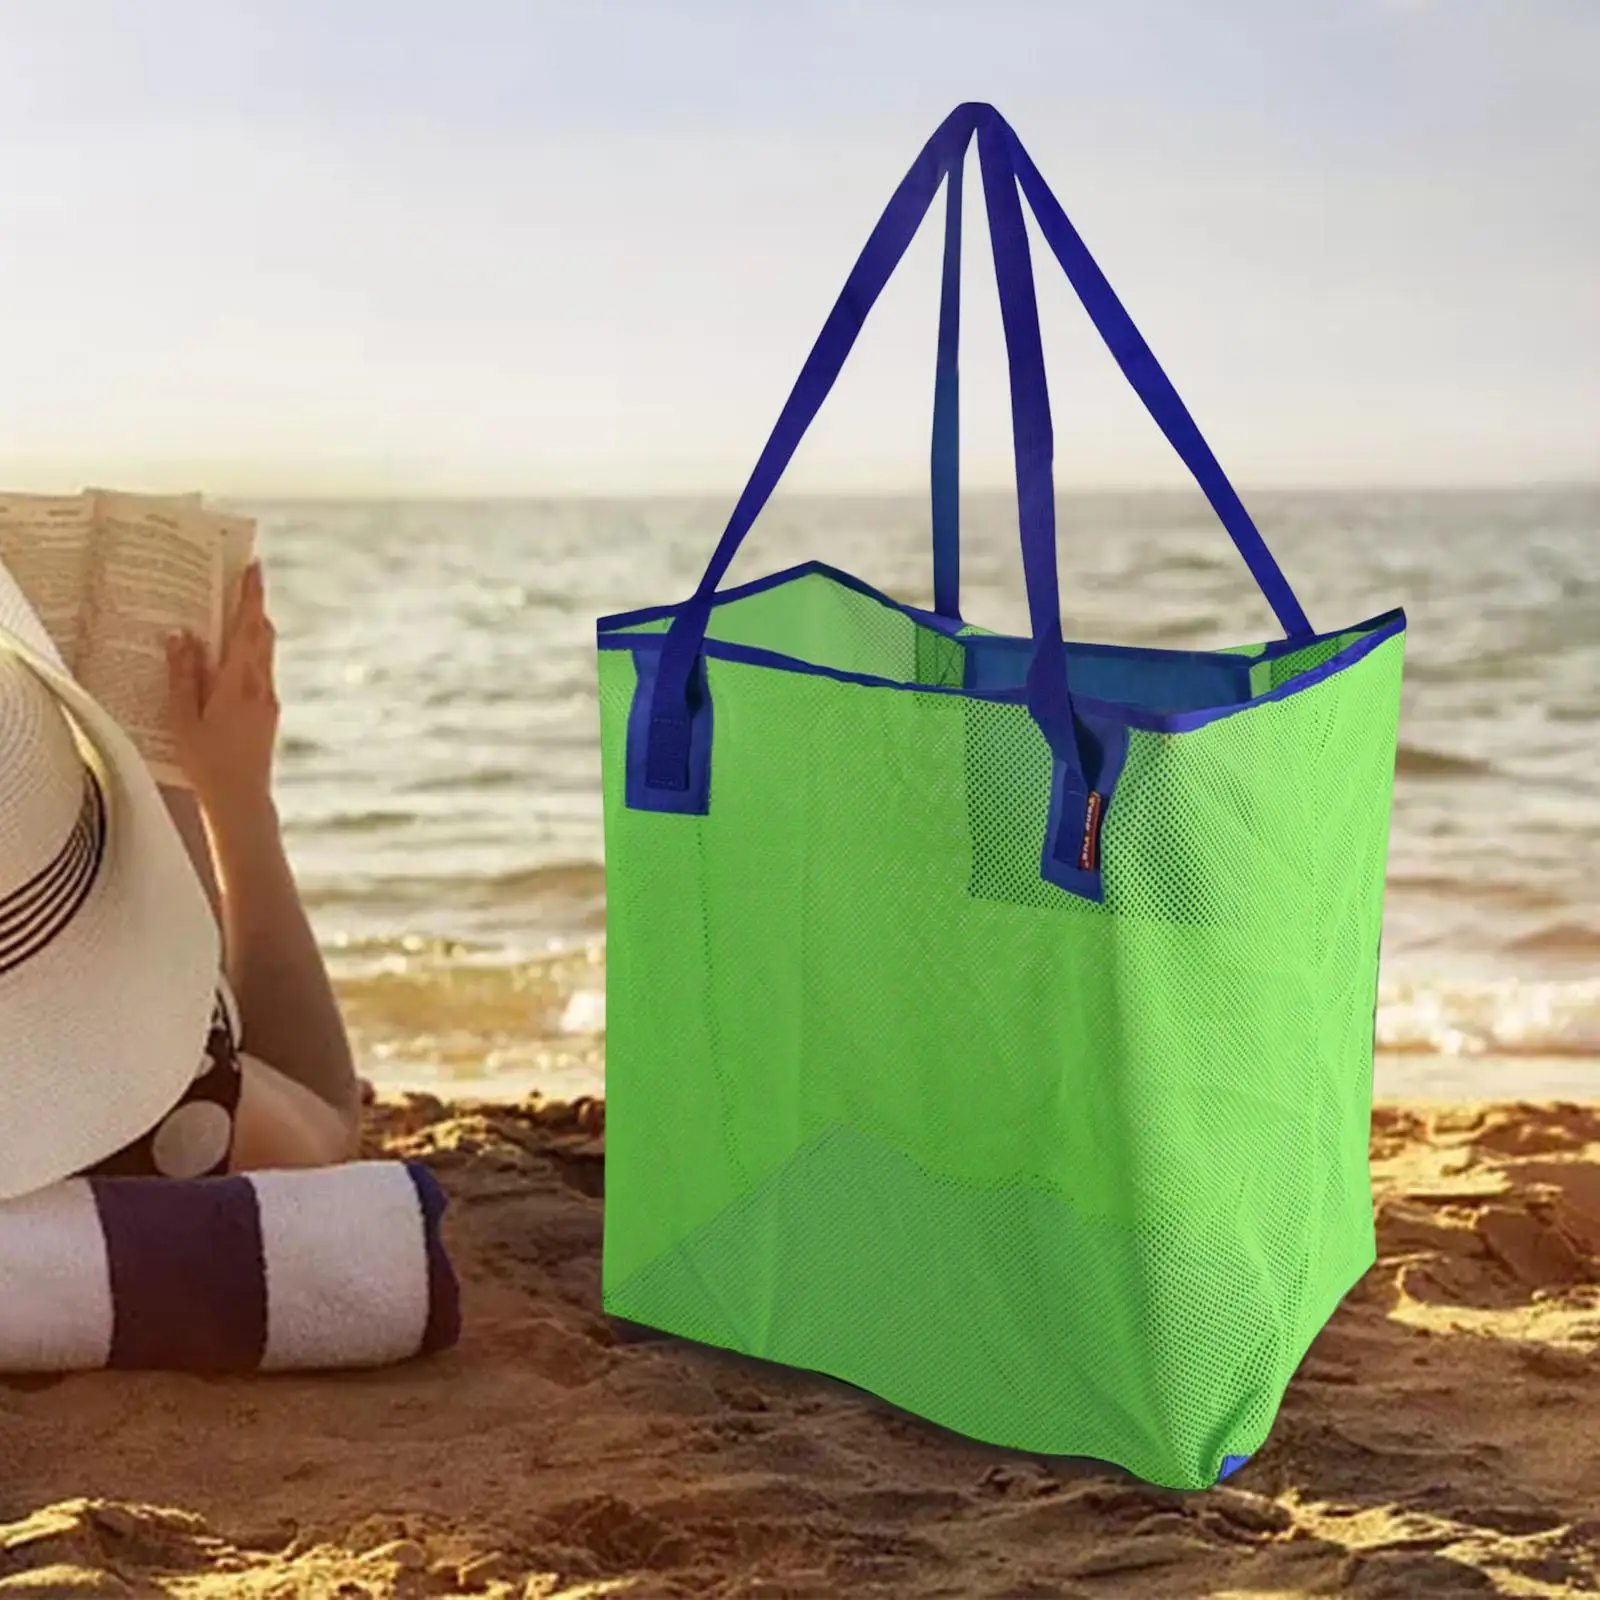 Portable Beach Bag Tote Towels Storage Bag Kids Toy Handbag for Sports Shopping Swimming Pool Travel Beach Bag